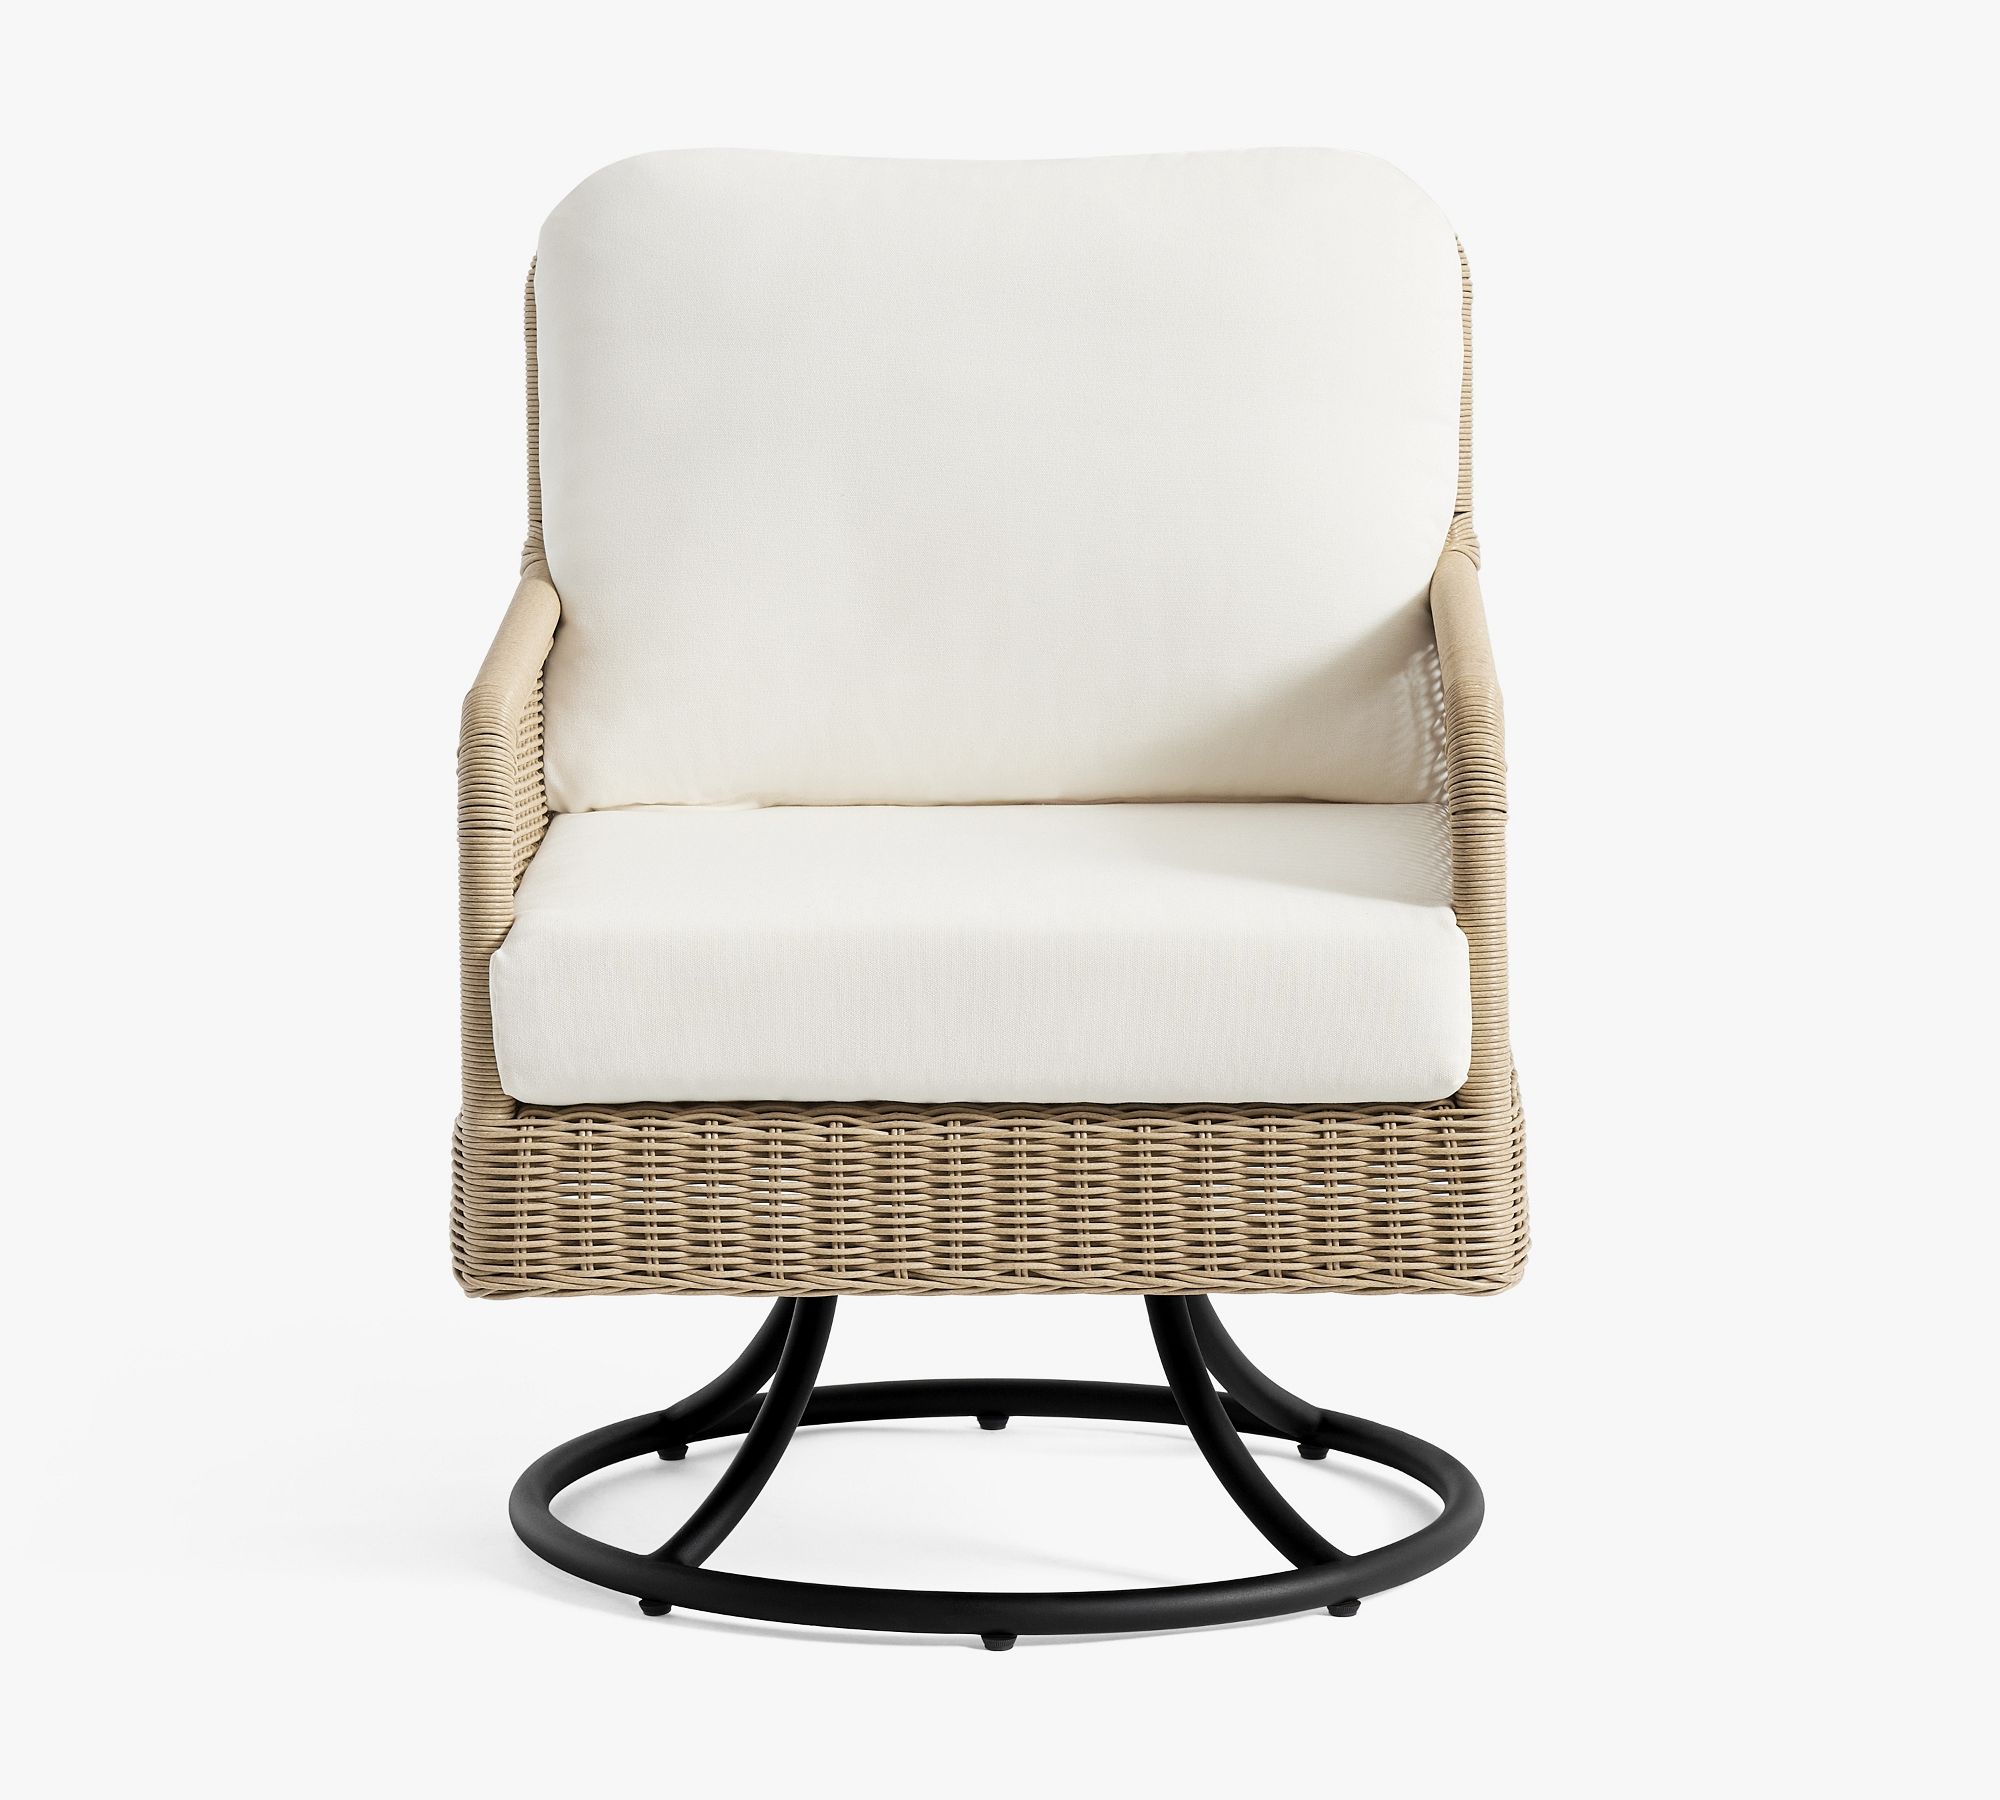 Tulum Wicker Swivel Outdoor Lounge Chair